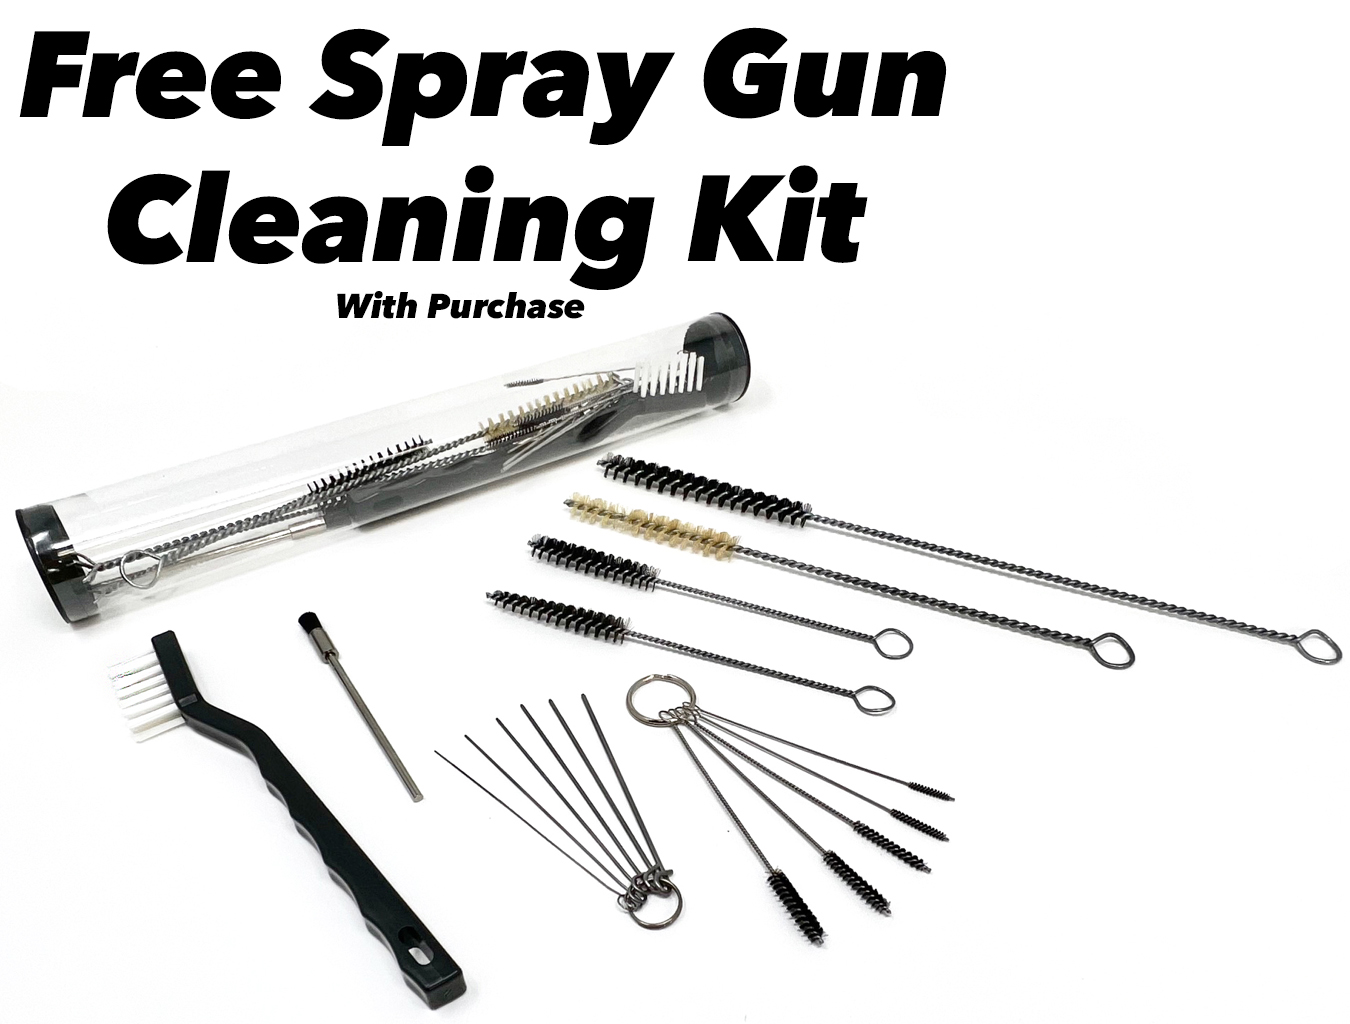 Paint Sprayers Plus Spray Gun Cleaning Kit